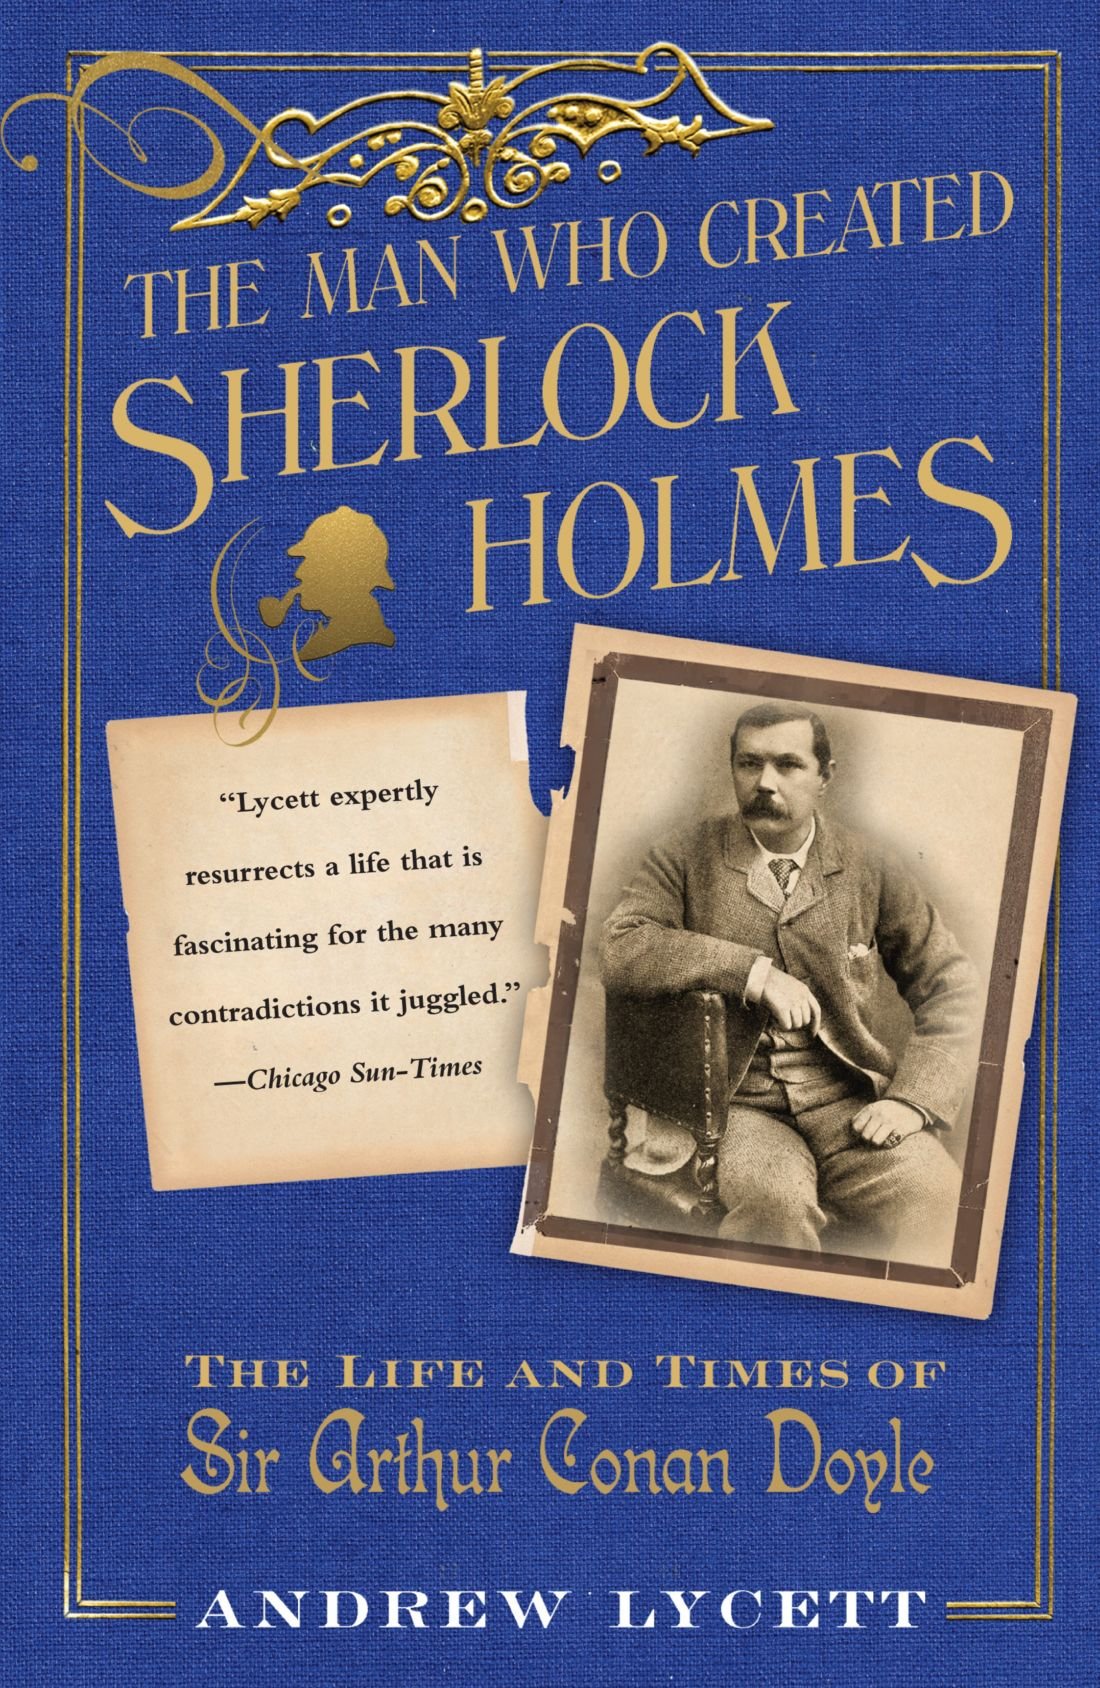 The Man Who Created Sherlock Holmes: The Life and Times of Sir Arthur Conan Doyle